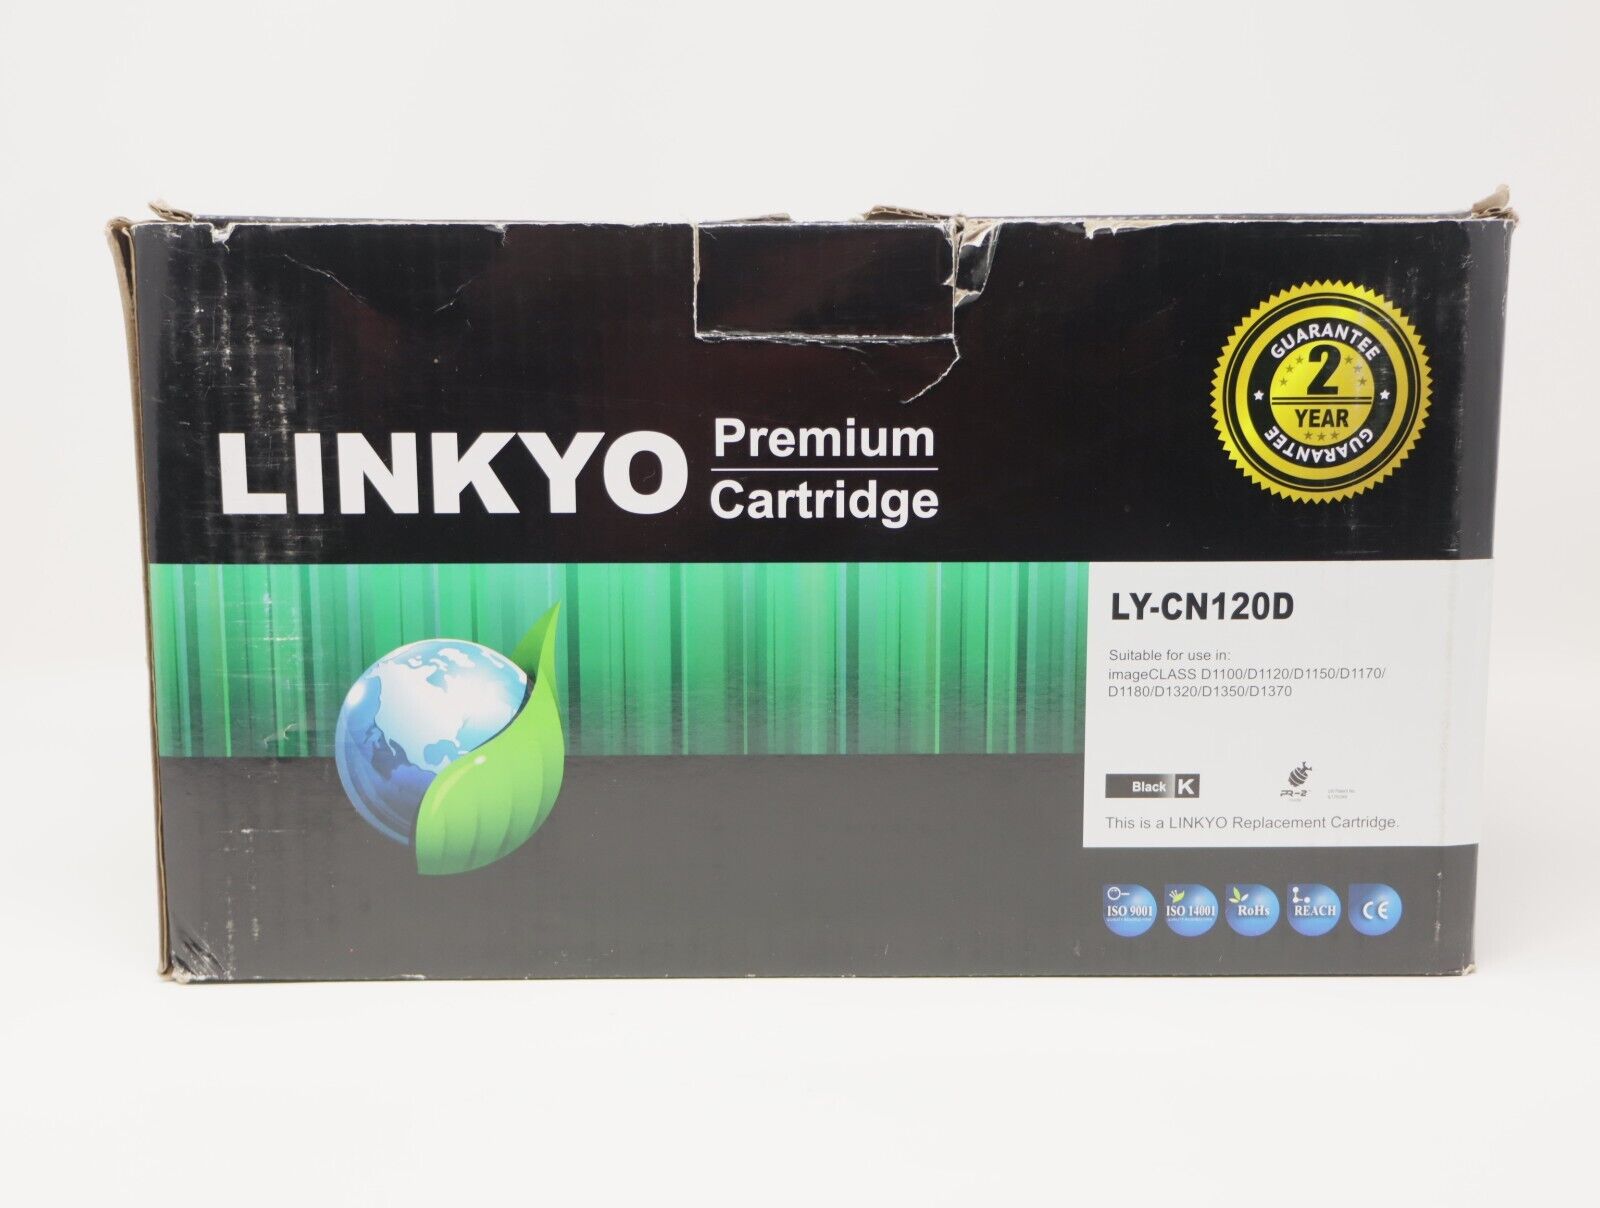 LINKYO Premium 1 Cartridge LY-CN120D Black K D1100 D1120 D1150 D1170 D1180 D1320